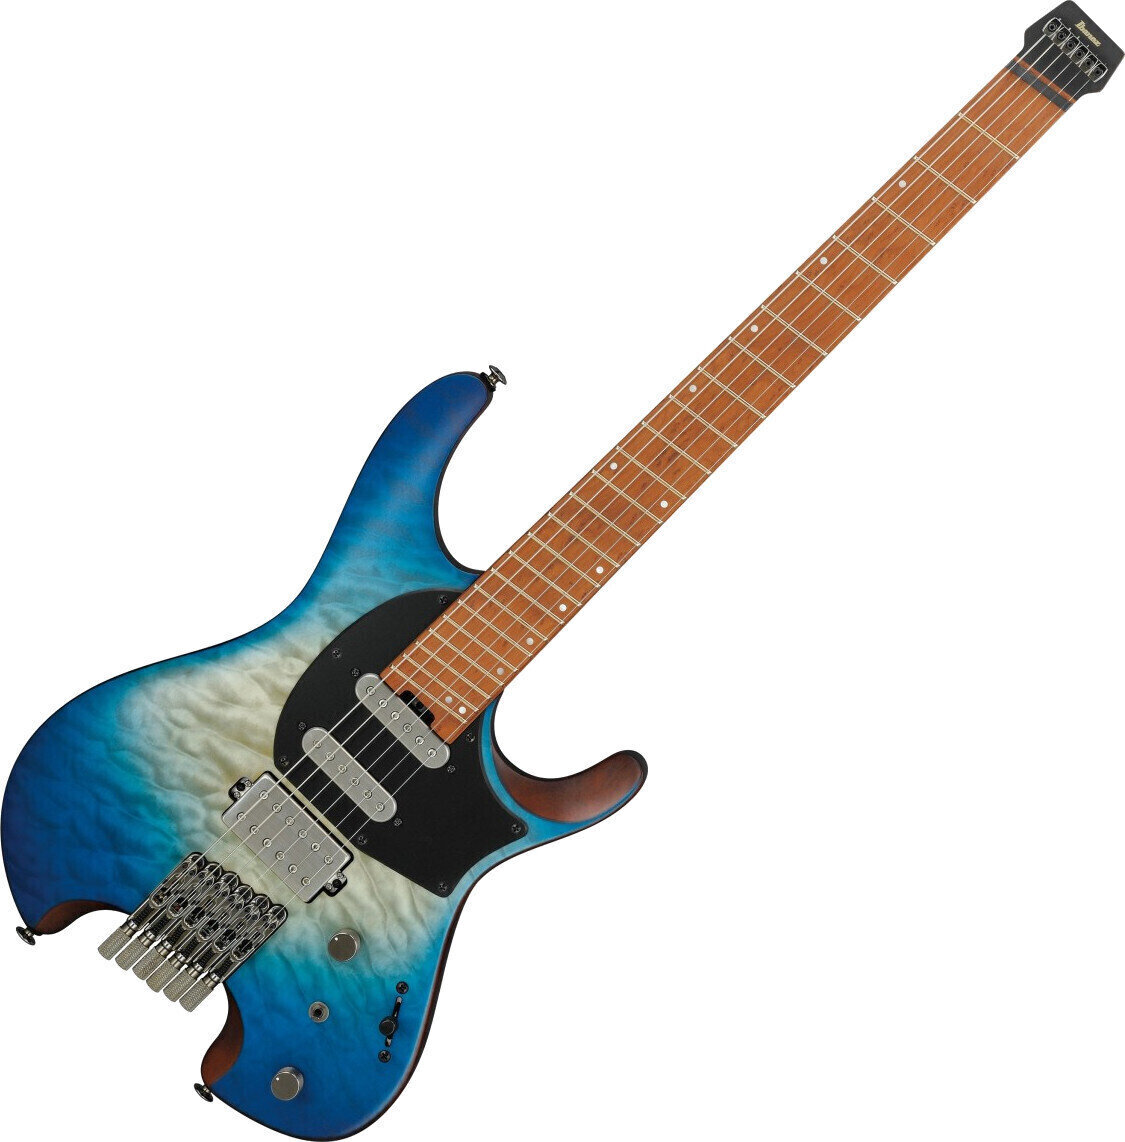 Headless gitara Ibanez QX54QM-BSM Blue Sphere Burst